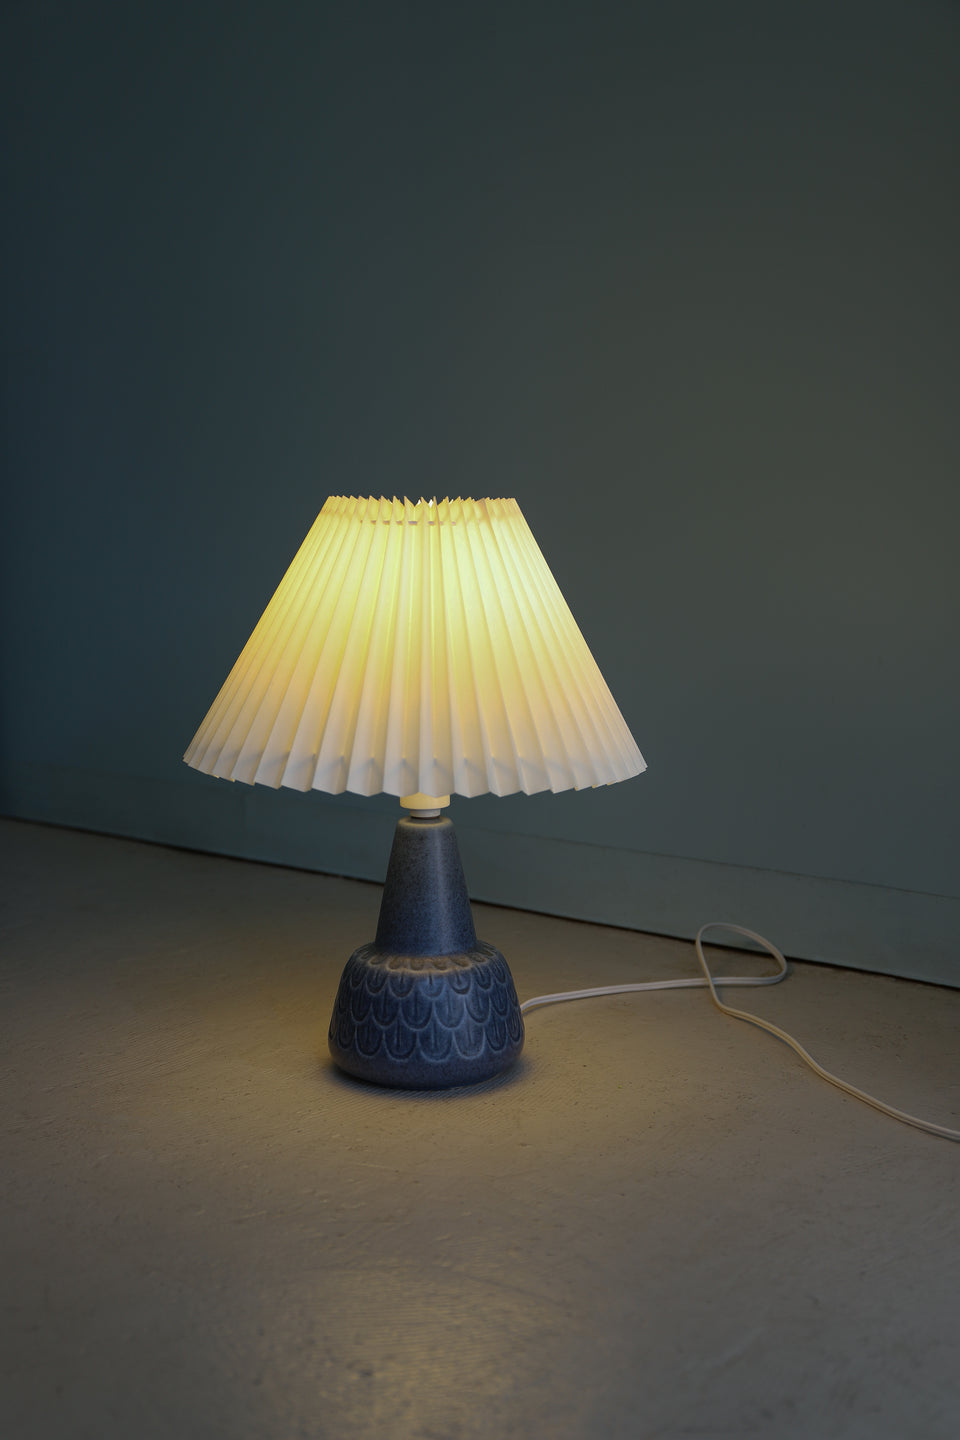 Danish Vintage Søholm Table Lamp Model 1015/スーホルム テーブルランプ エイナー・ヨハンセン 間接照明 北欧インテリア デンマークヴィンテージ